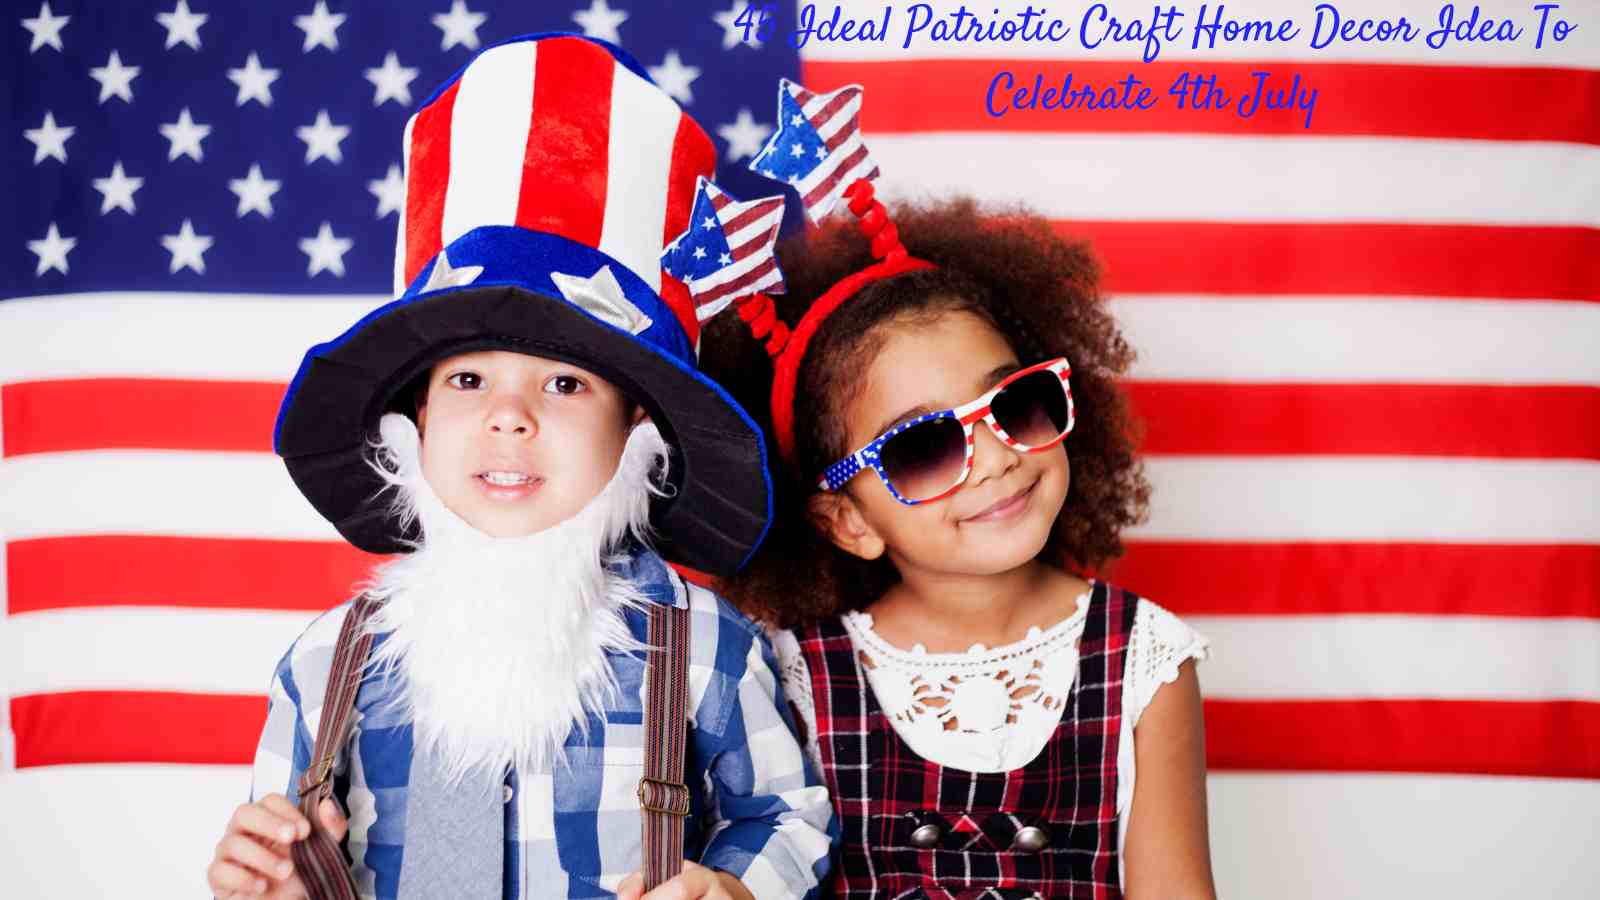 Patriotic Craft Home Decor Idea To Celebrate 4th of July